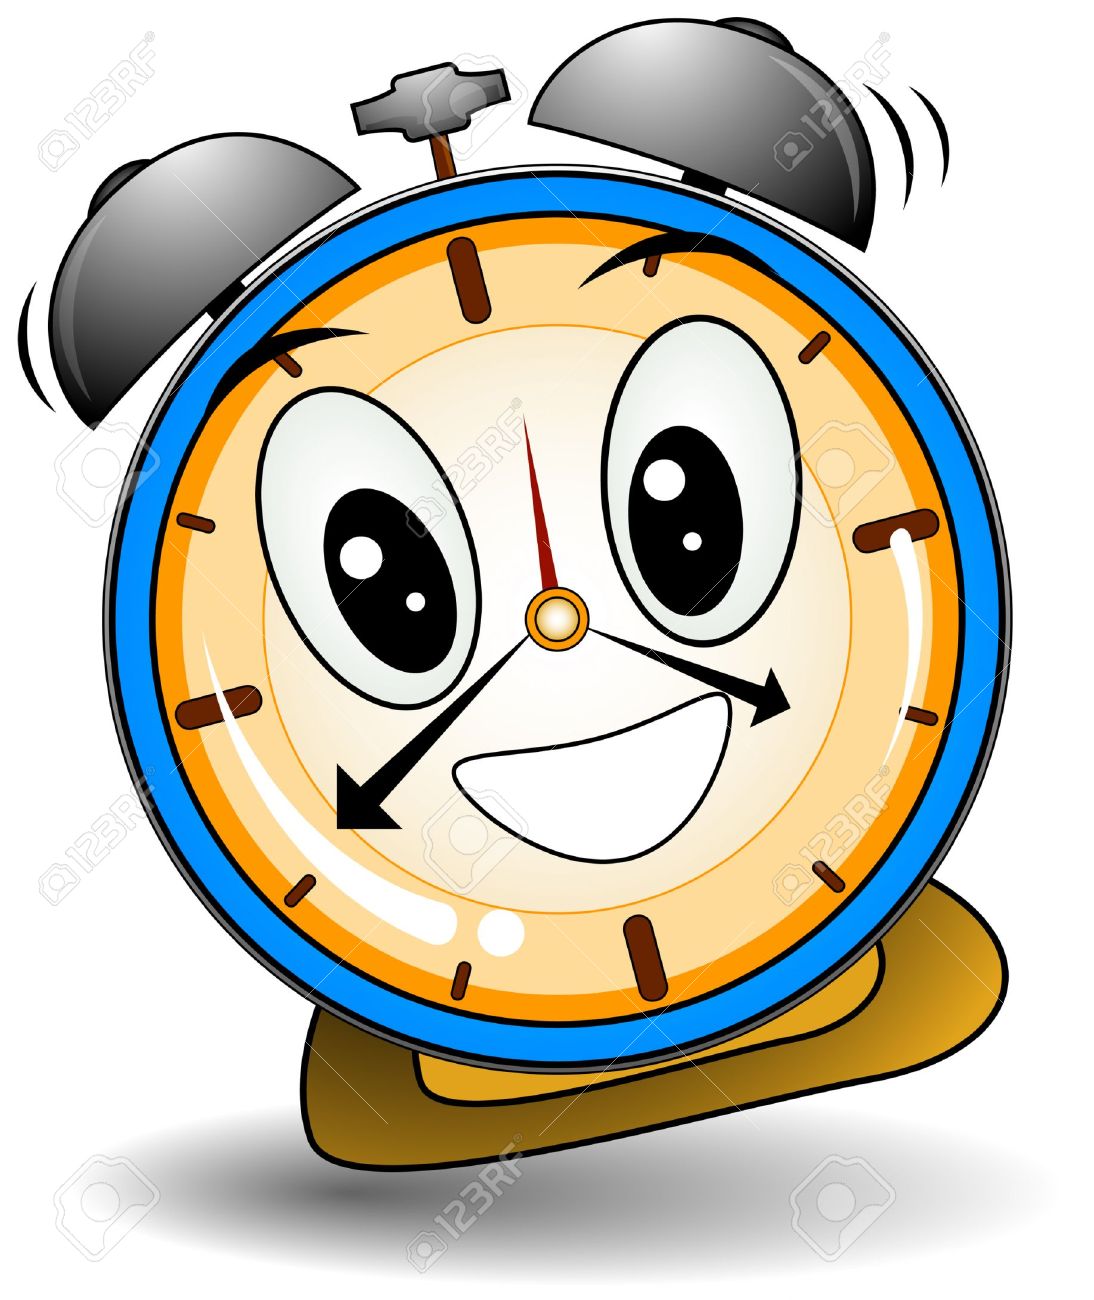 Alarm Clock Clip Art - Tumundografico